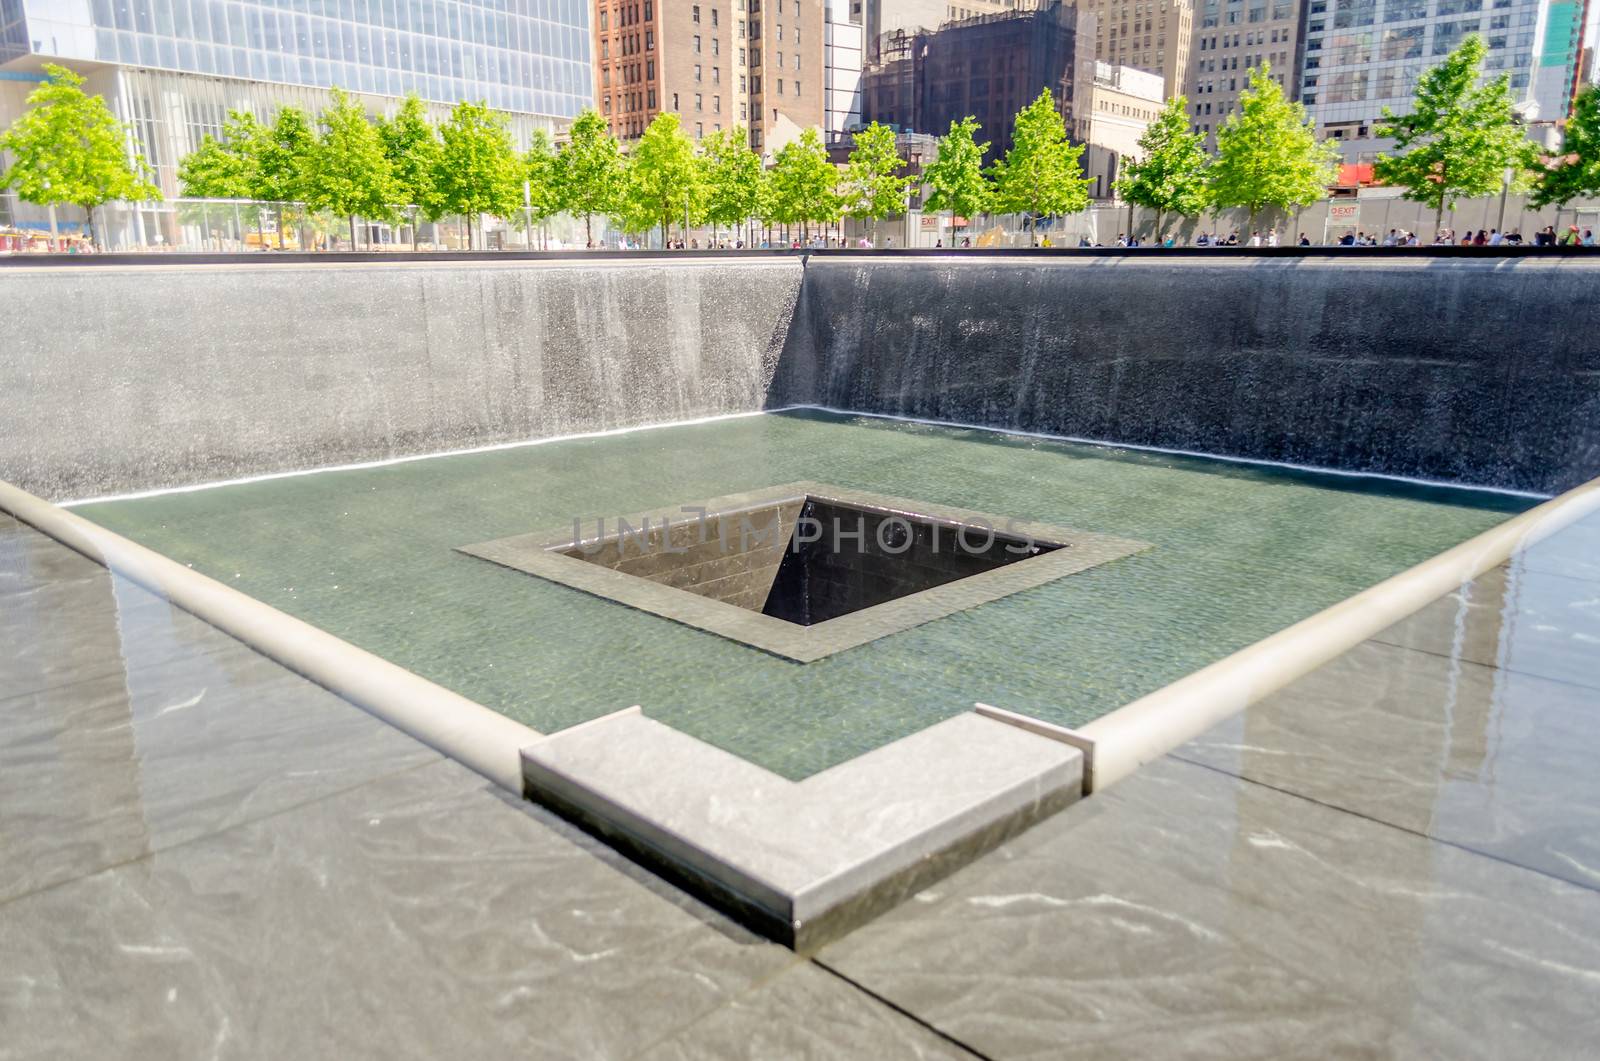 National September 11 Memorial by marcorubino